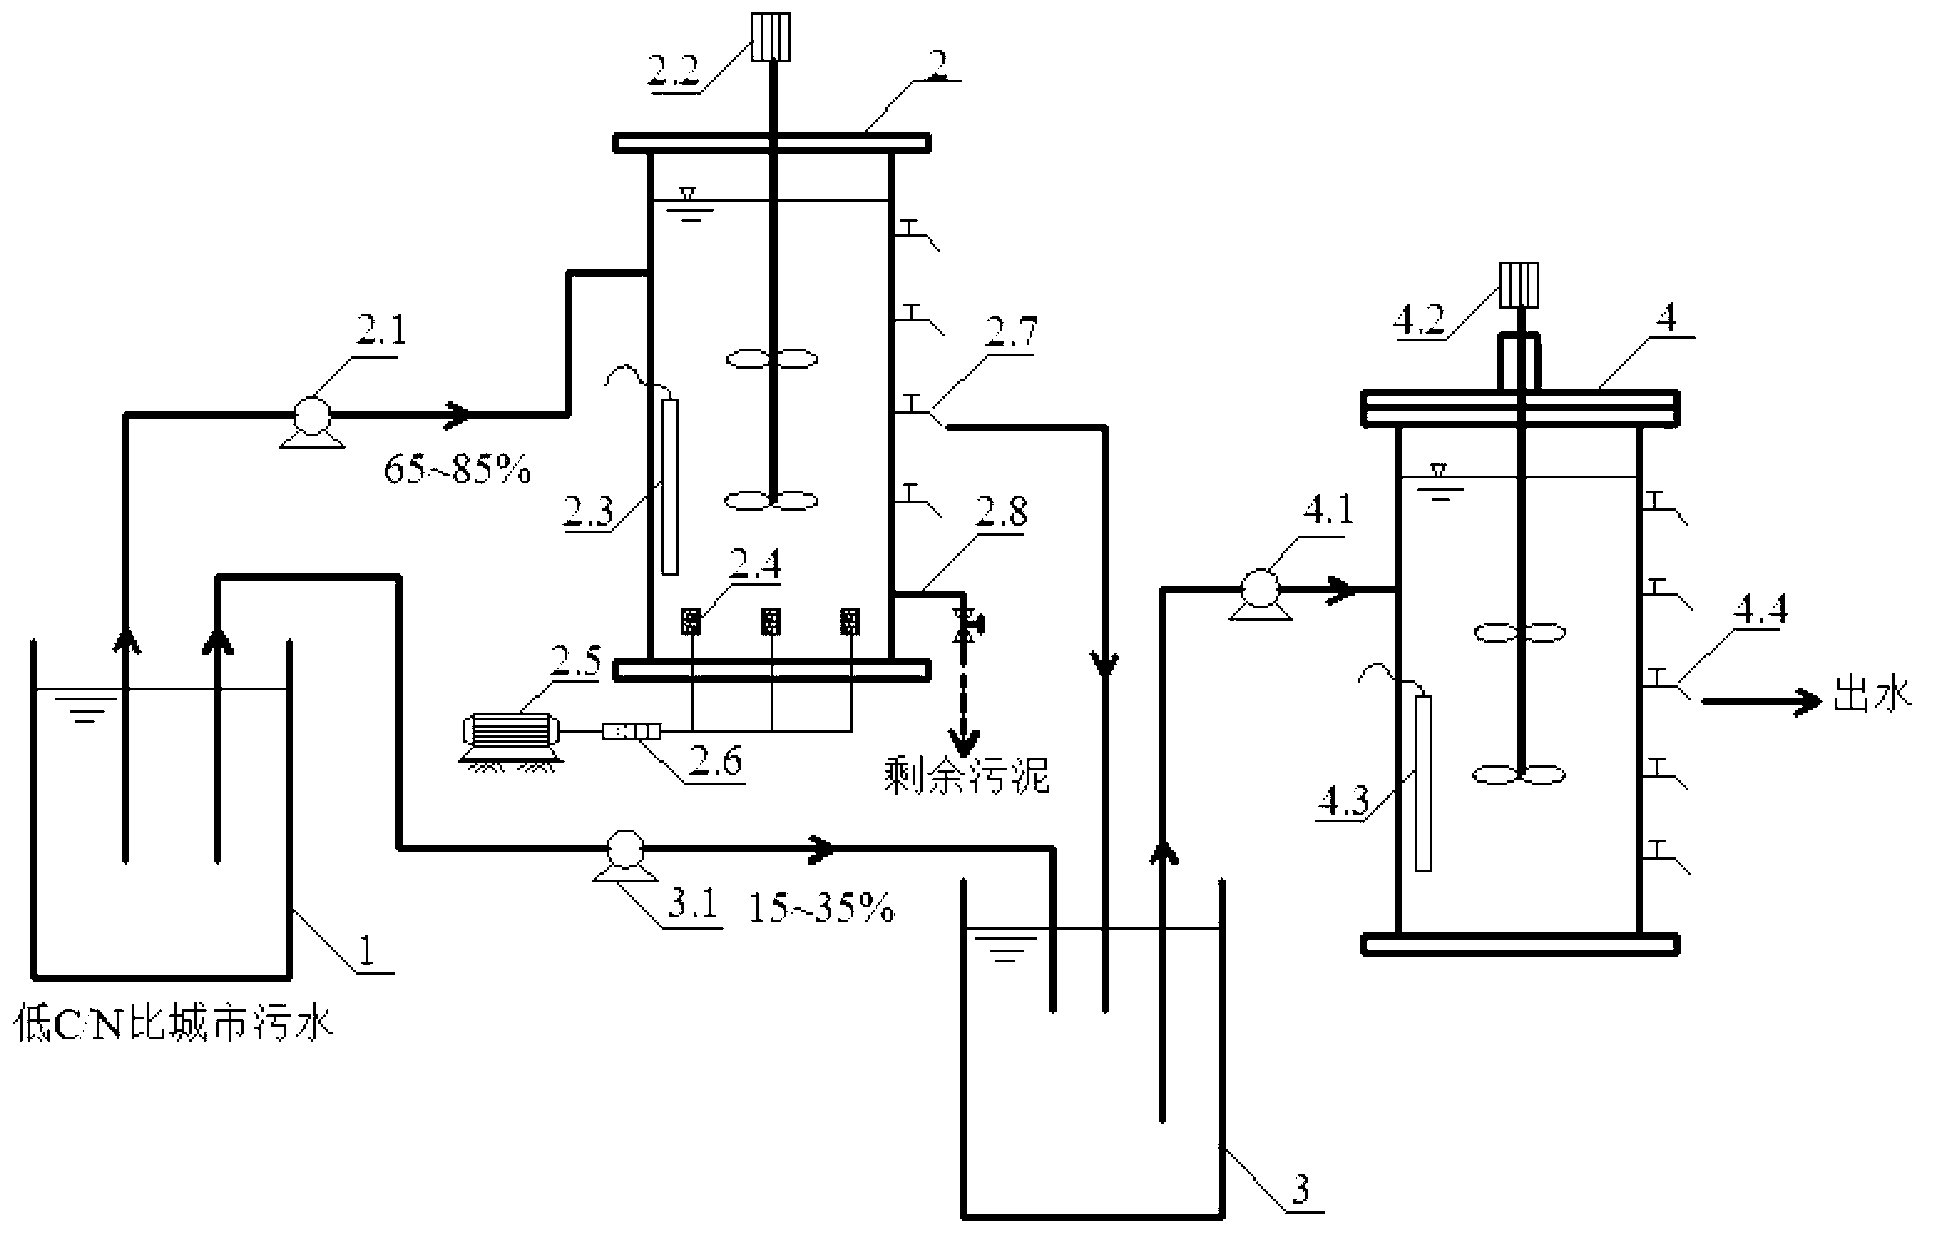 Device and method for treating low-C/N (carbon/nitrogen) ratio urban sewage by an anoxic/aerobic SBR-DEAMOX (denitrifying ammonium oxidation) denitrification process